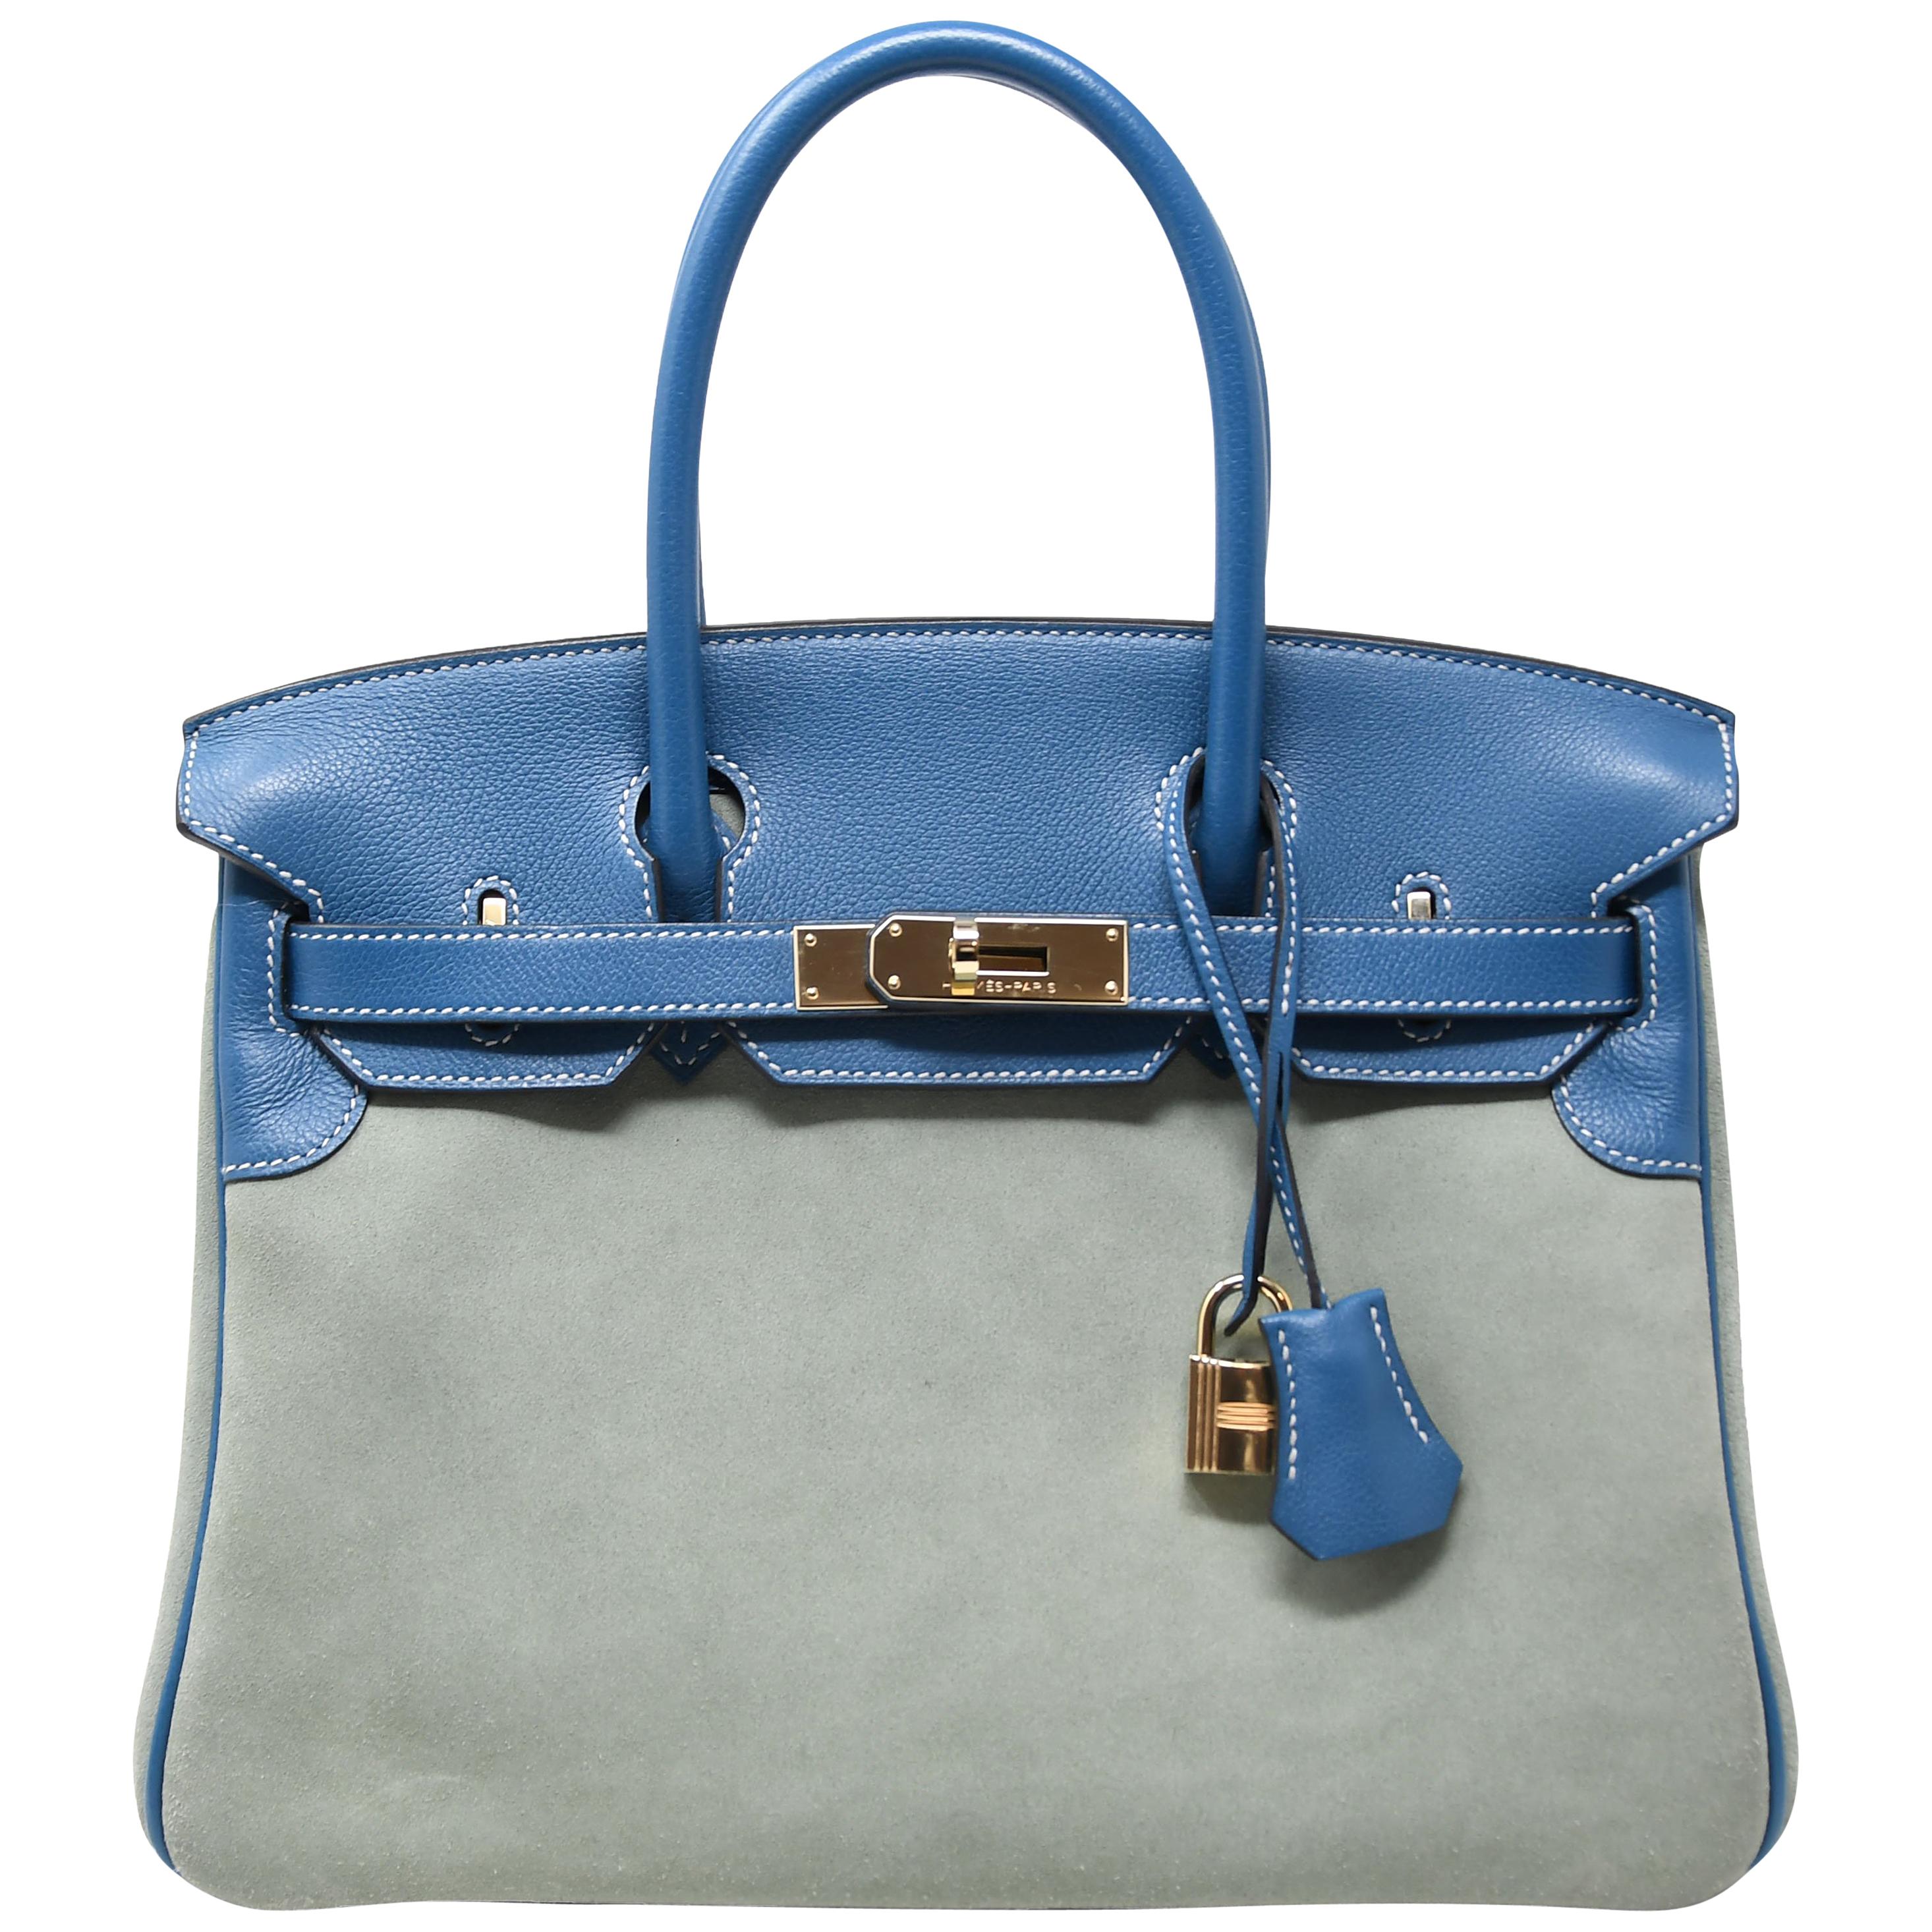 Hermes Birkin Bag 30cm Blue Thalassa Suede with Blue Leather Trim with GHW